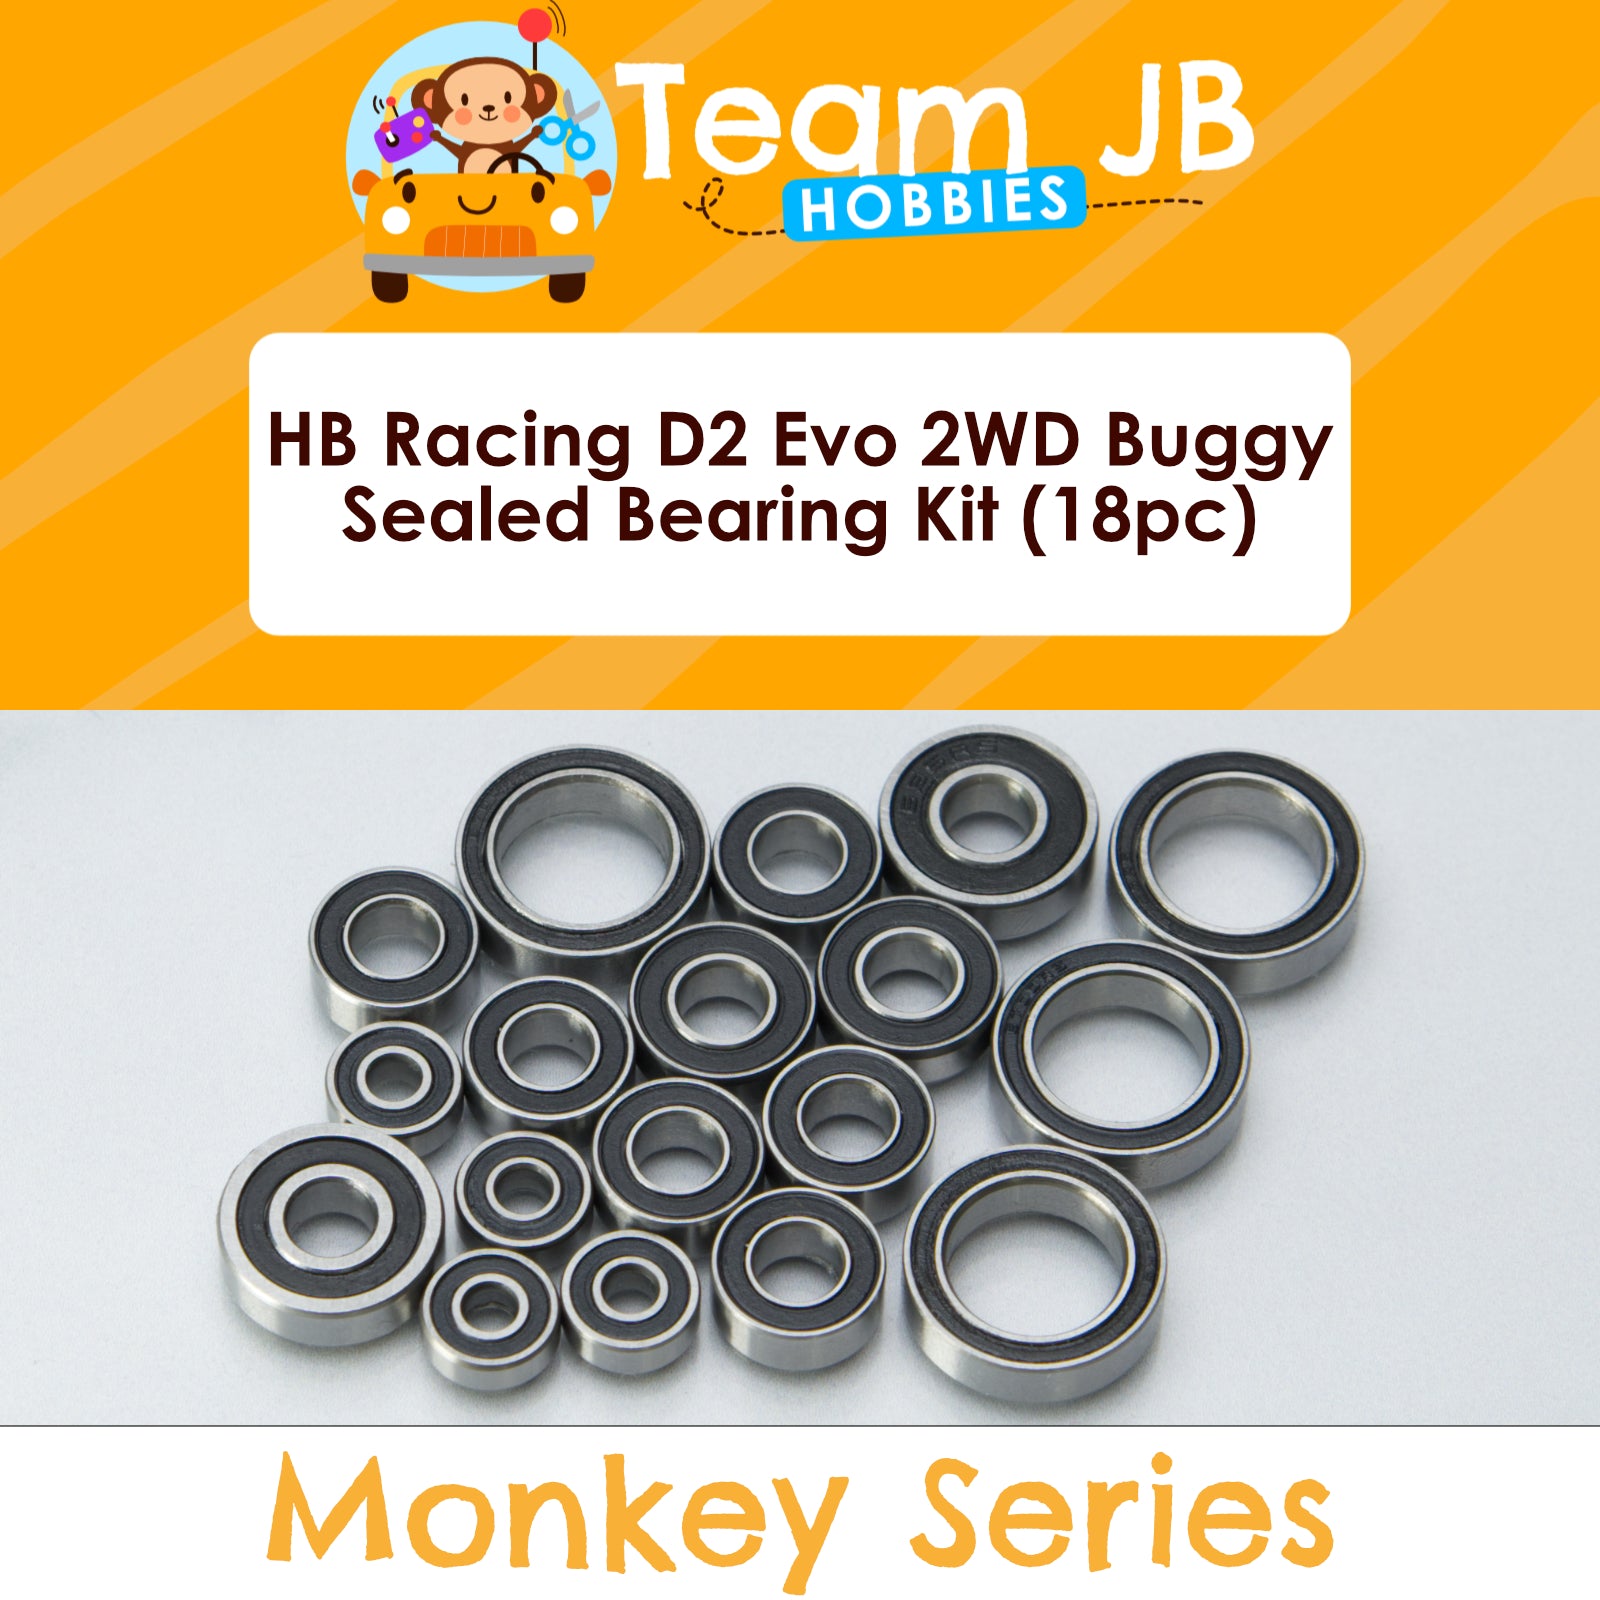 HB Racing D2 Evo 2WD Buggy - Sealed Bearing Kit